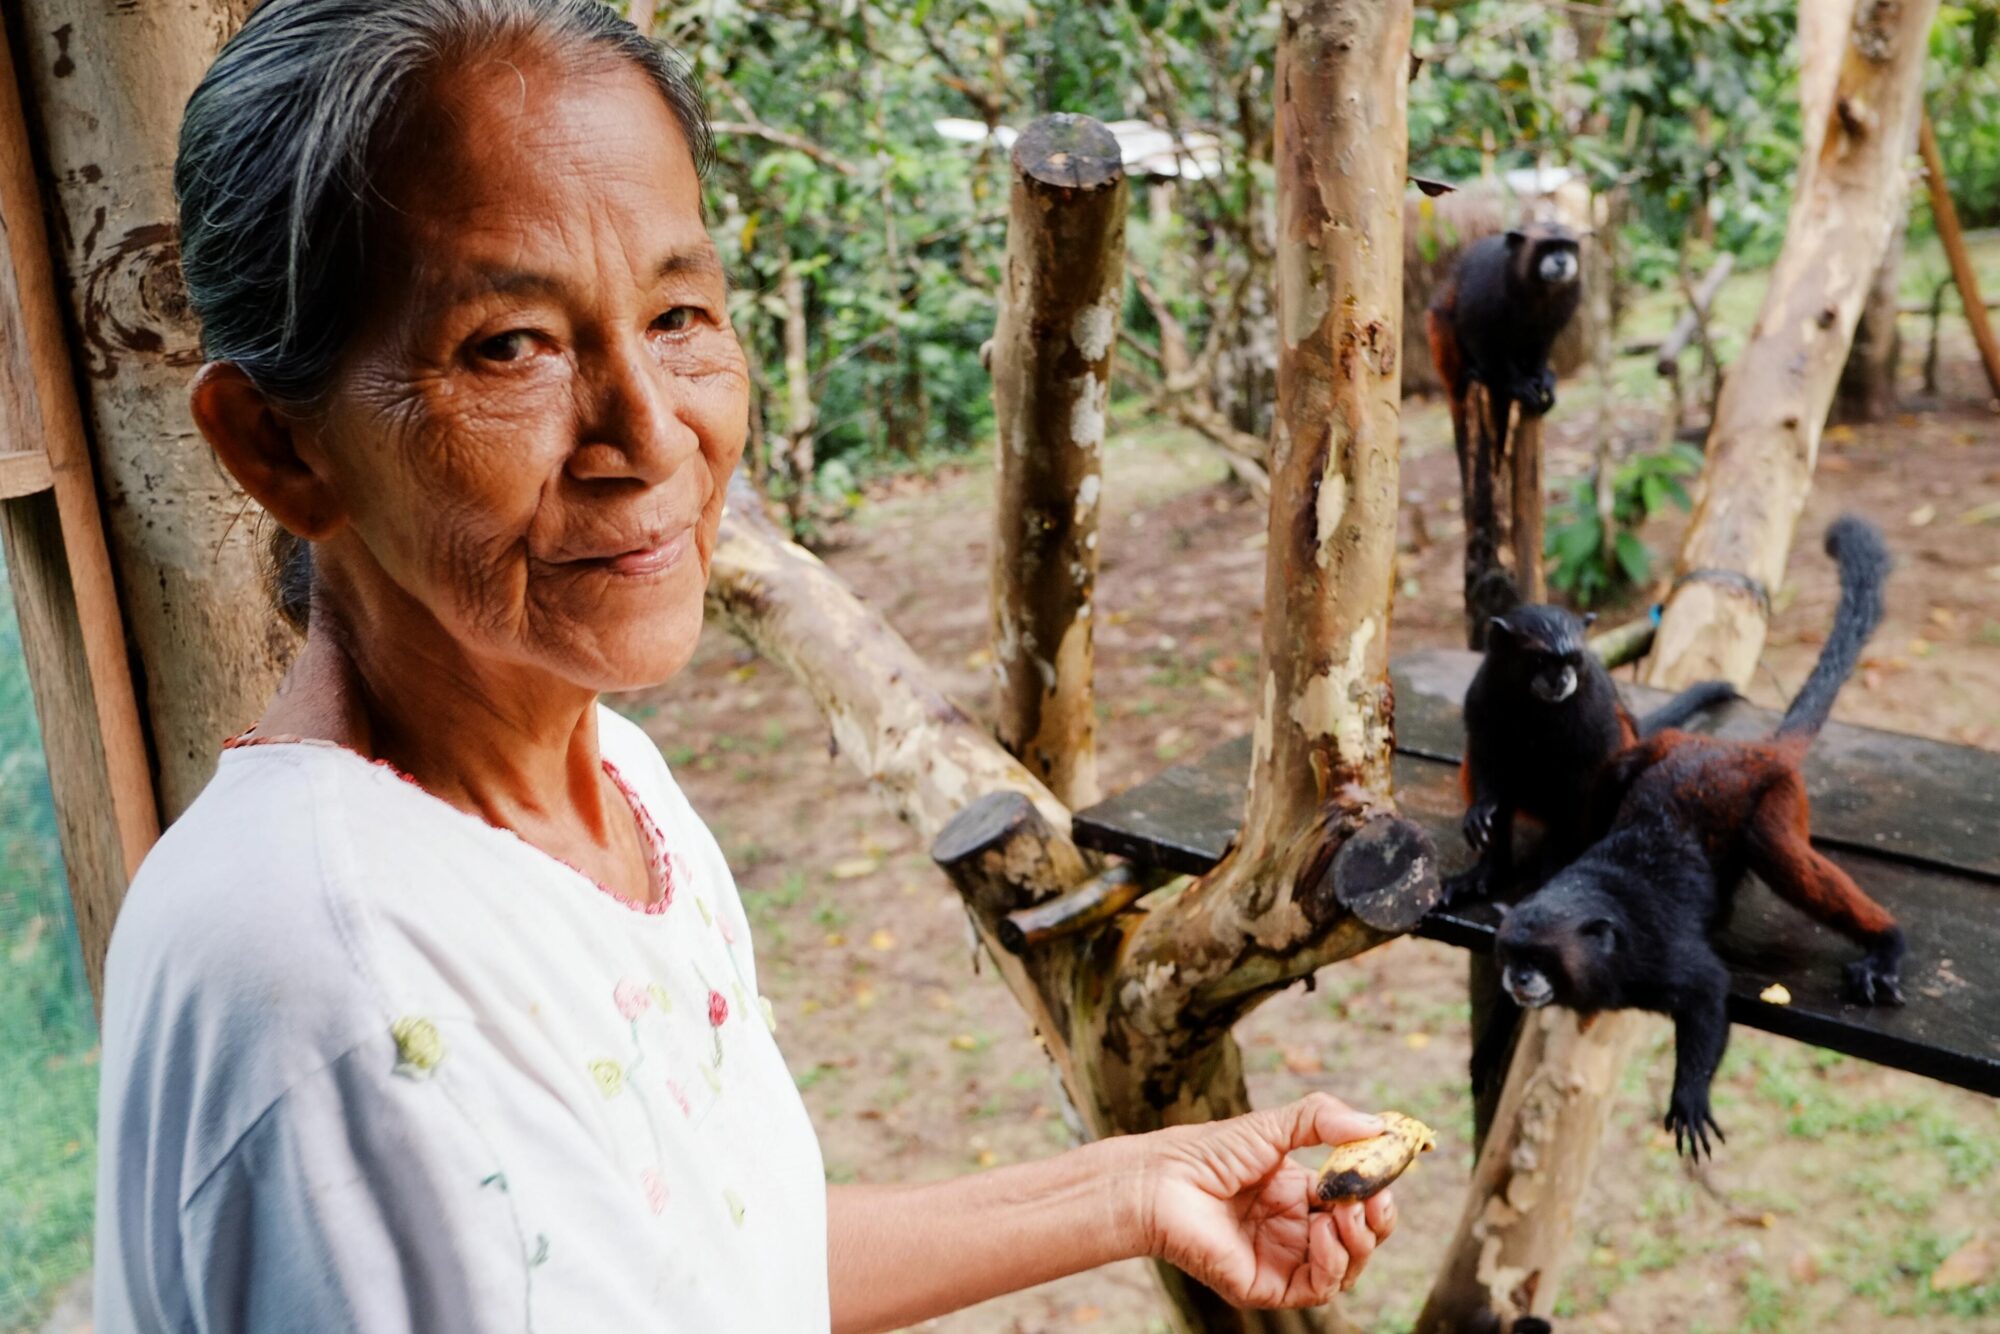 <p>Um membro da tribo indígena Ticuna na Amazônia colombiana alimenta um macaco com bananas (Imagem: Laszlo Mates<span id="automationContributor" class="copy-text"><span id="automationNormalName"></span> / Alamy)</span></p>